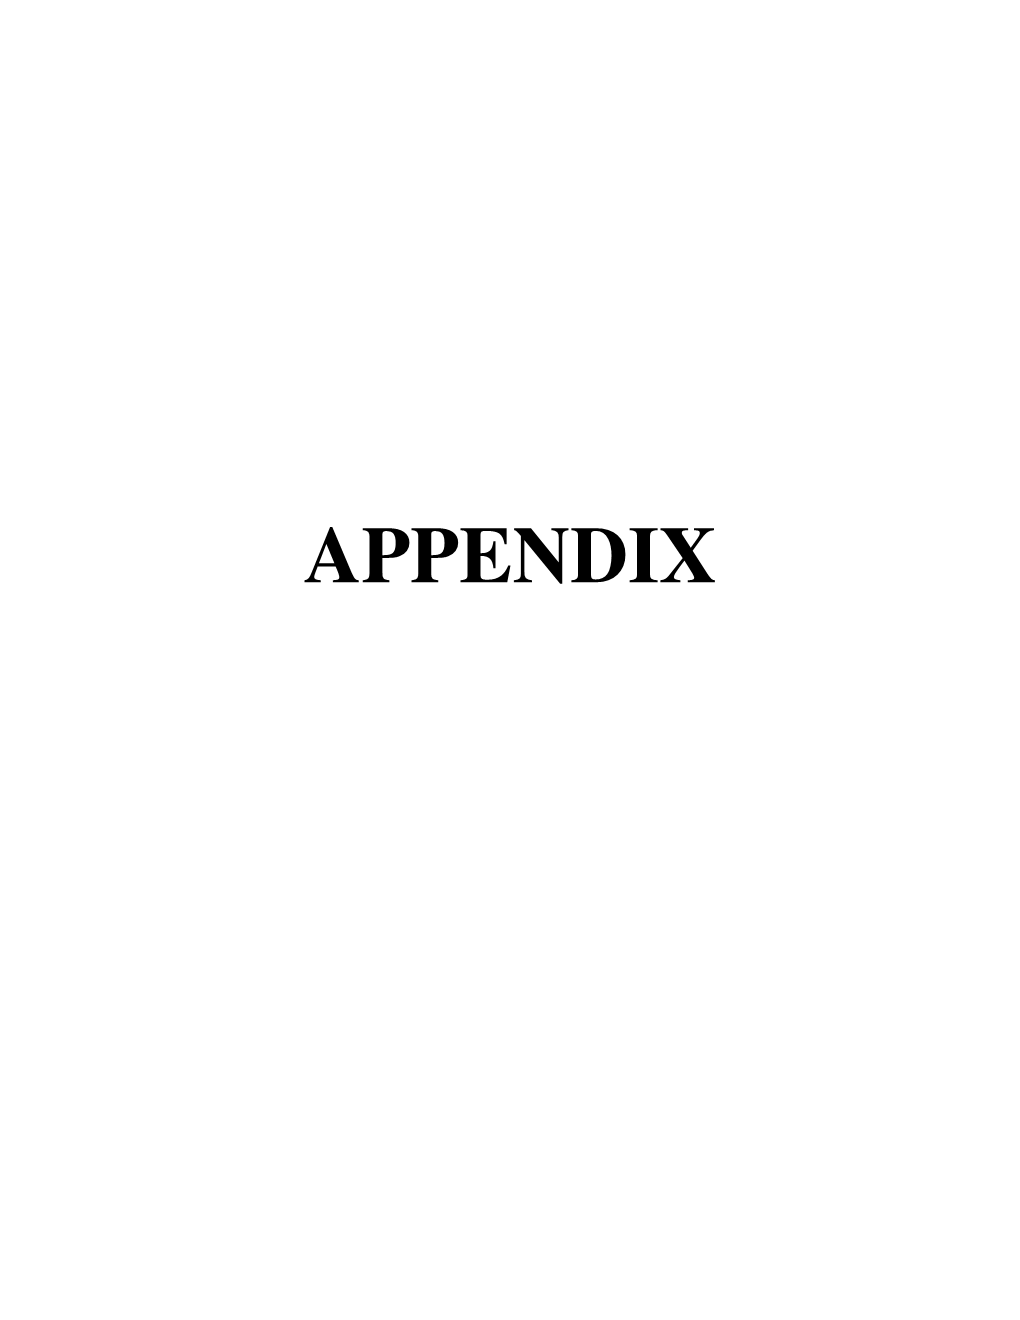 19 Jan 2012 Appendix.Pdf